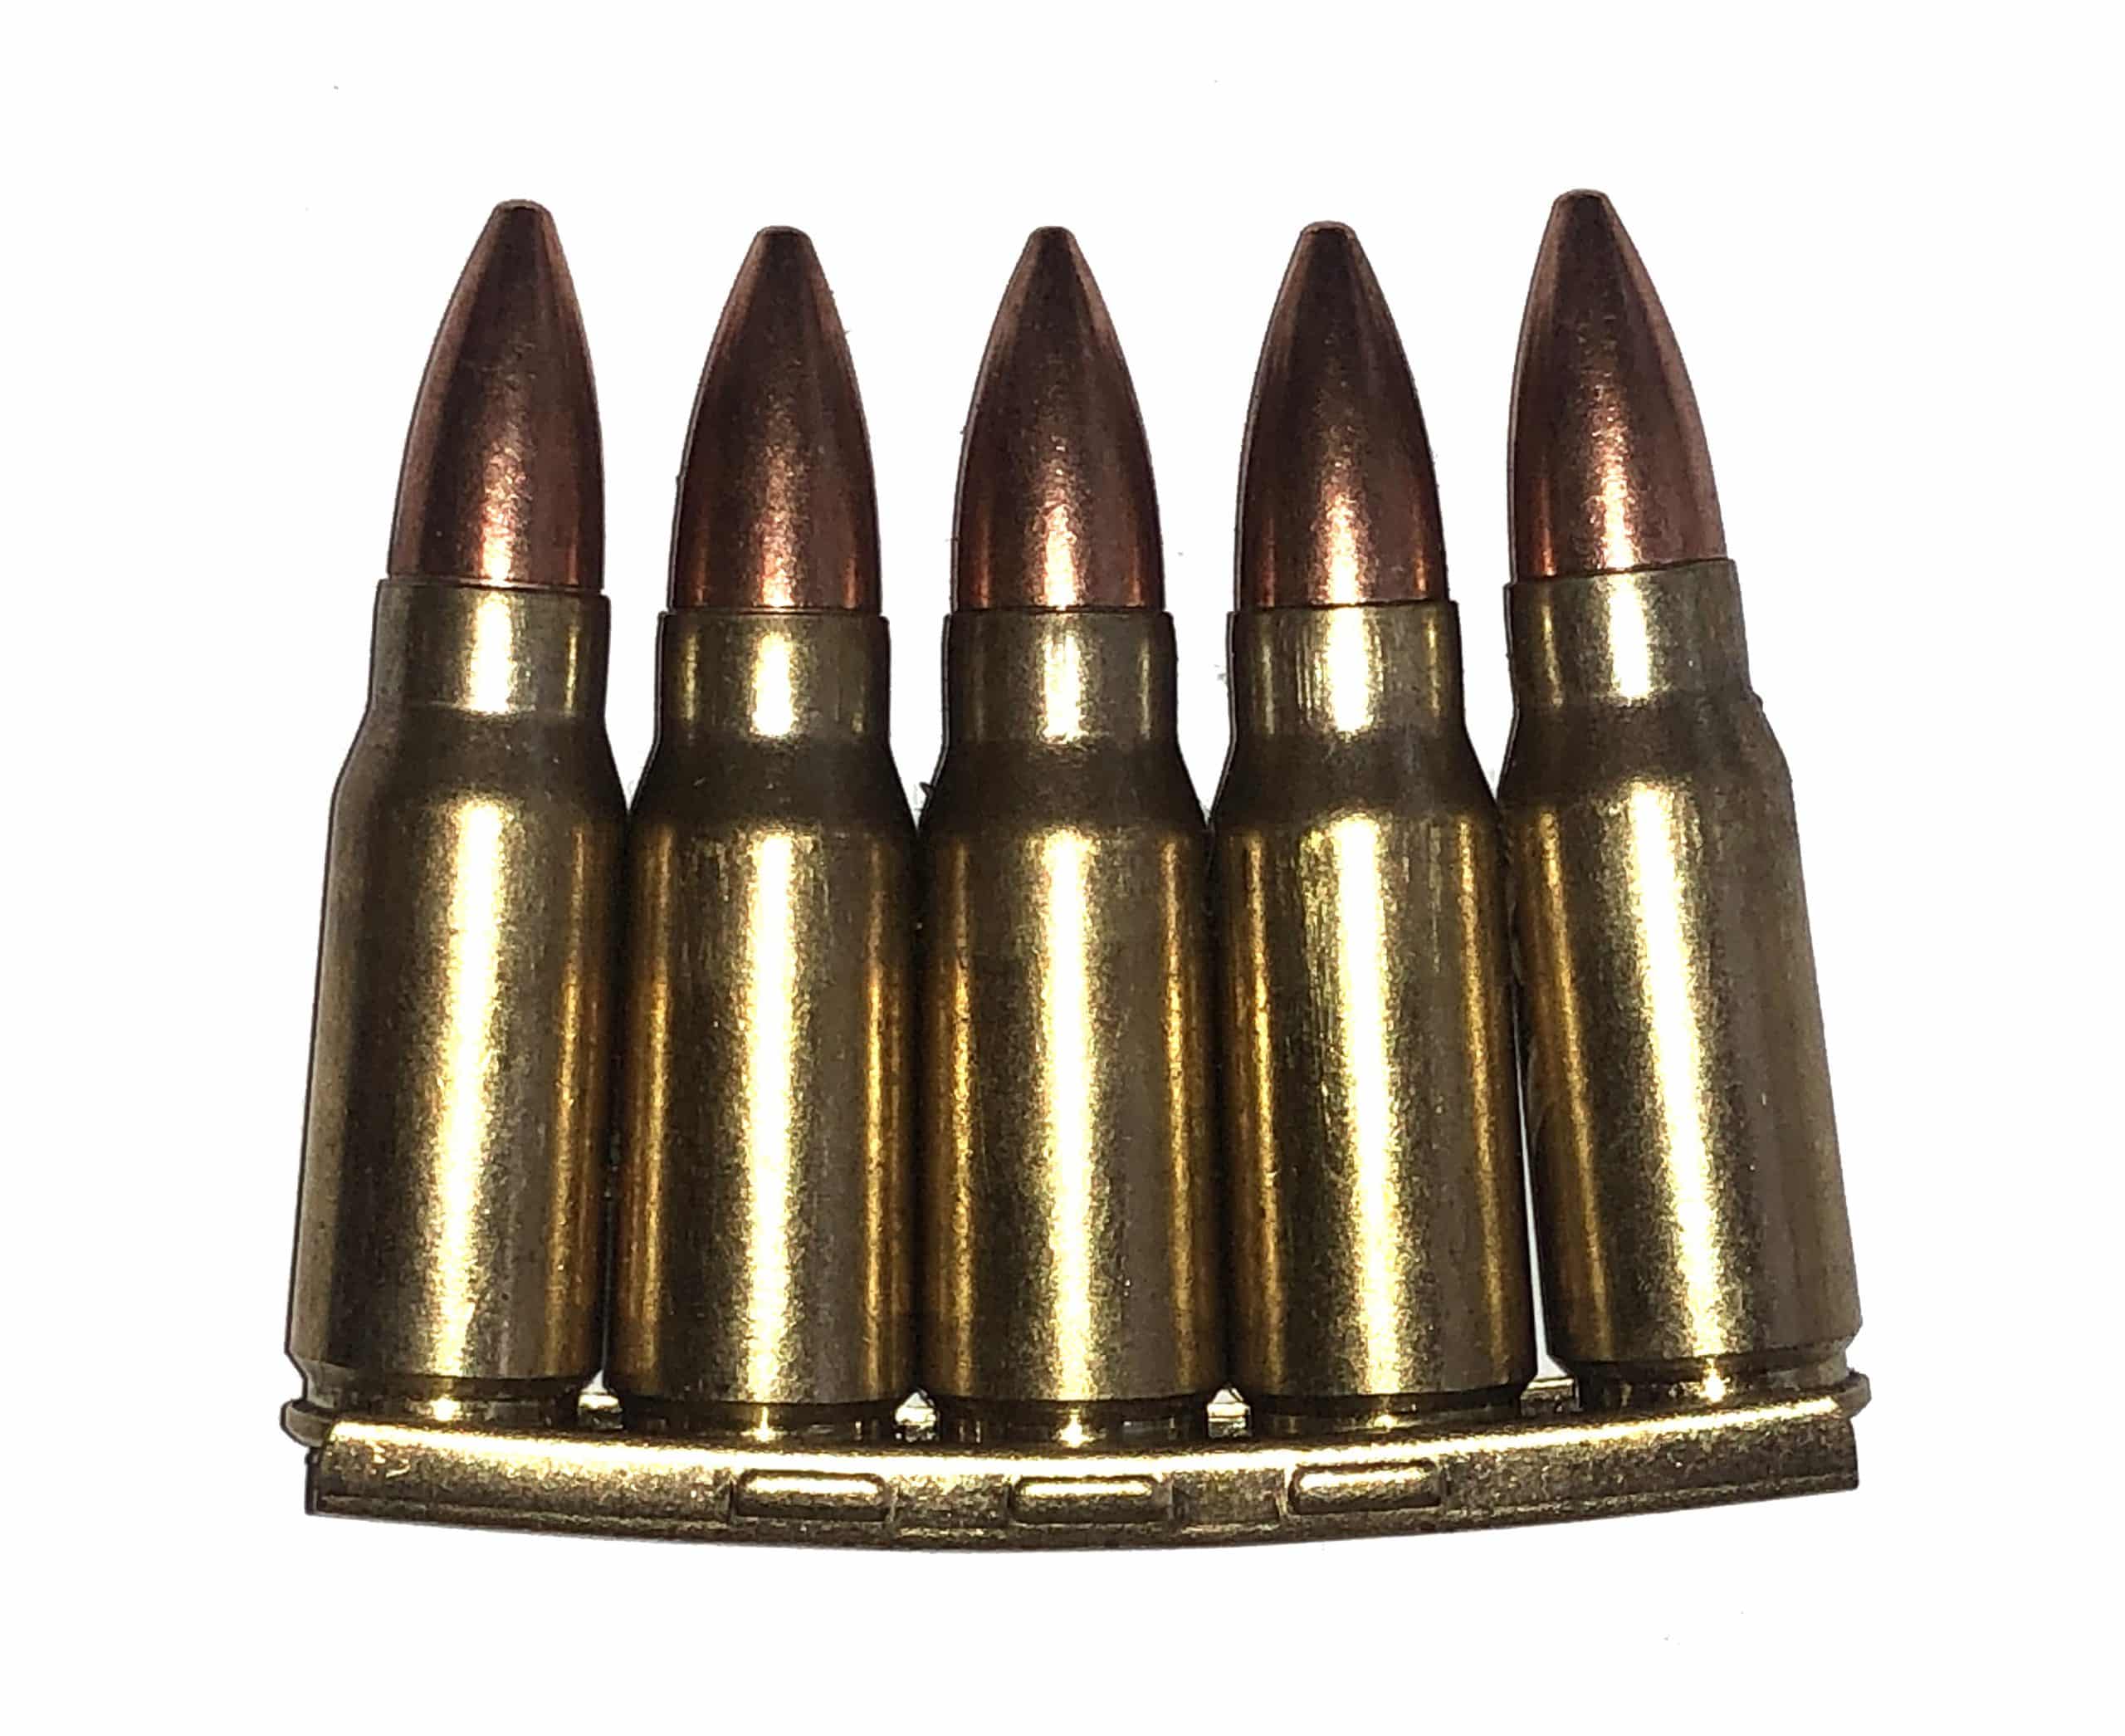 8mm Kurz Dummy Rounds Cartridges Snap Caps Fake Bullets in Stripper Clip J&M Spec INERT